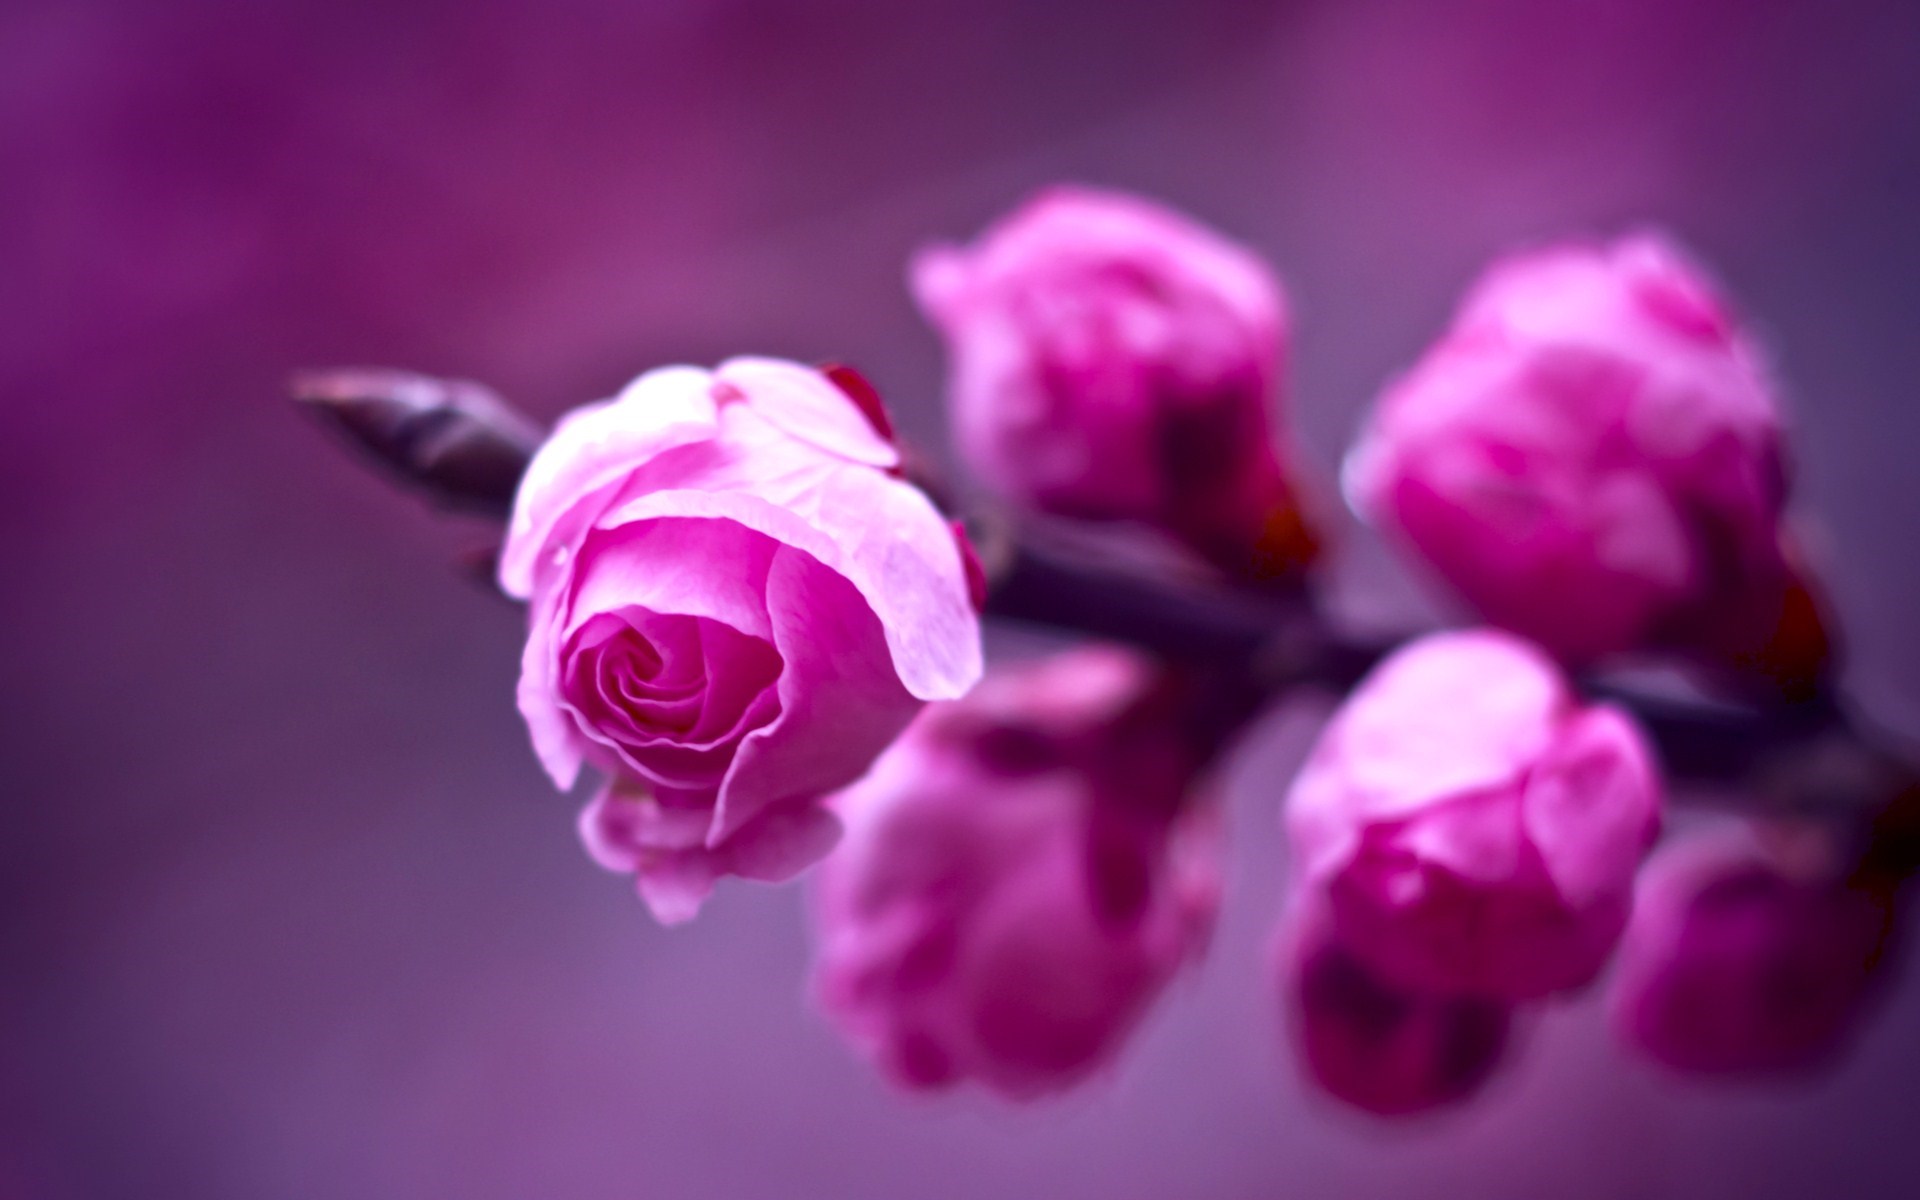 rose flower wallpaper hd free download,pink,violet,flower,petal,purple